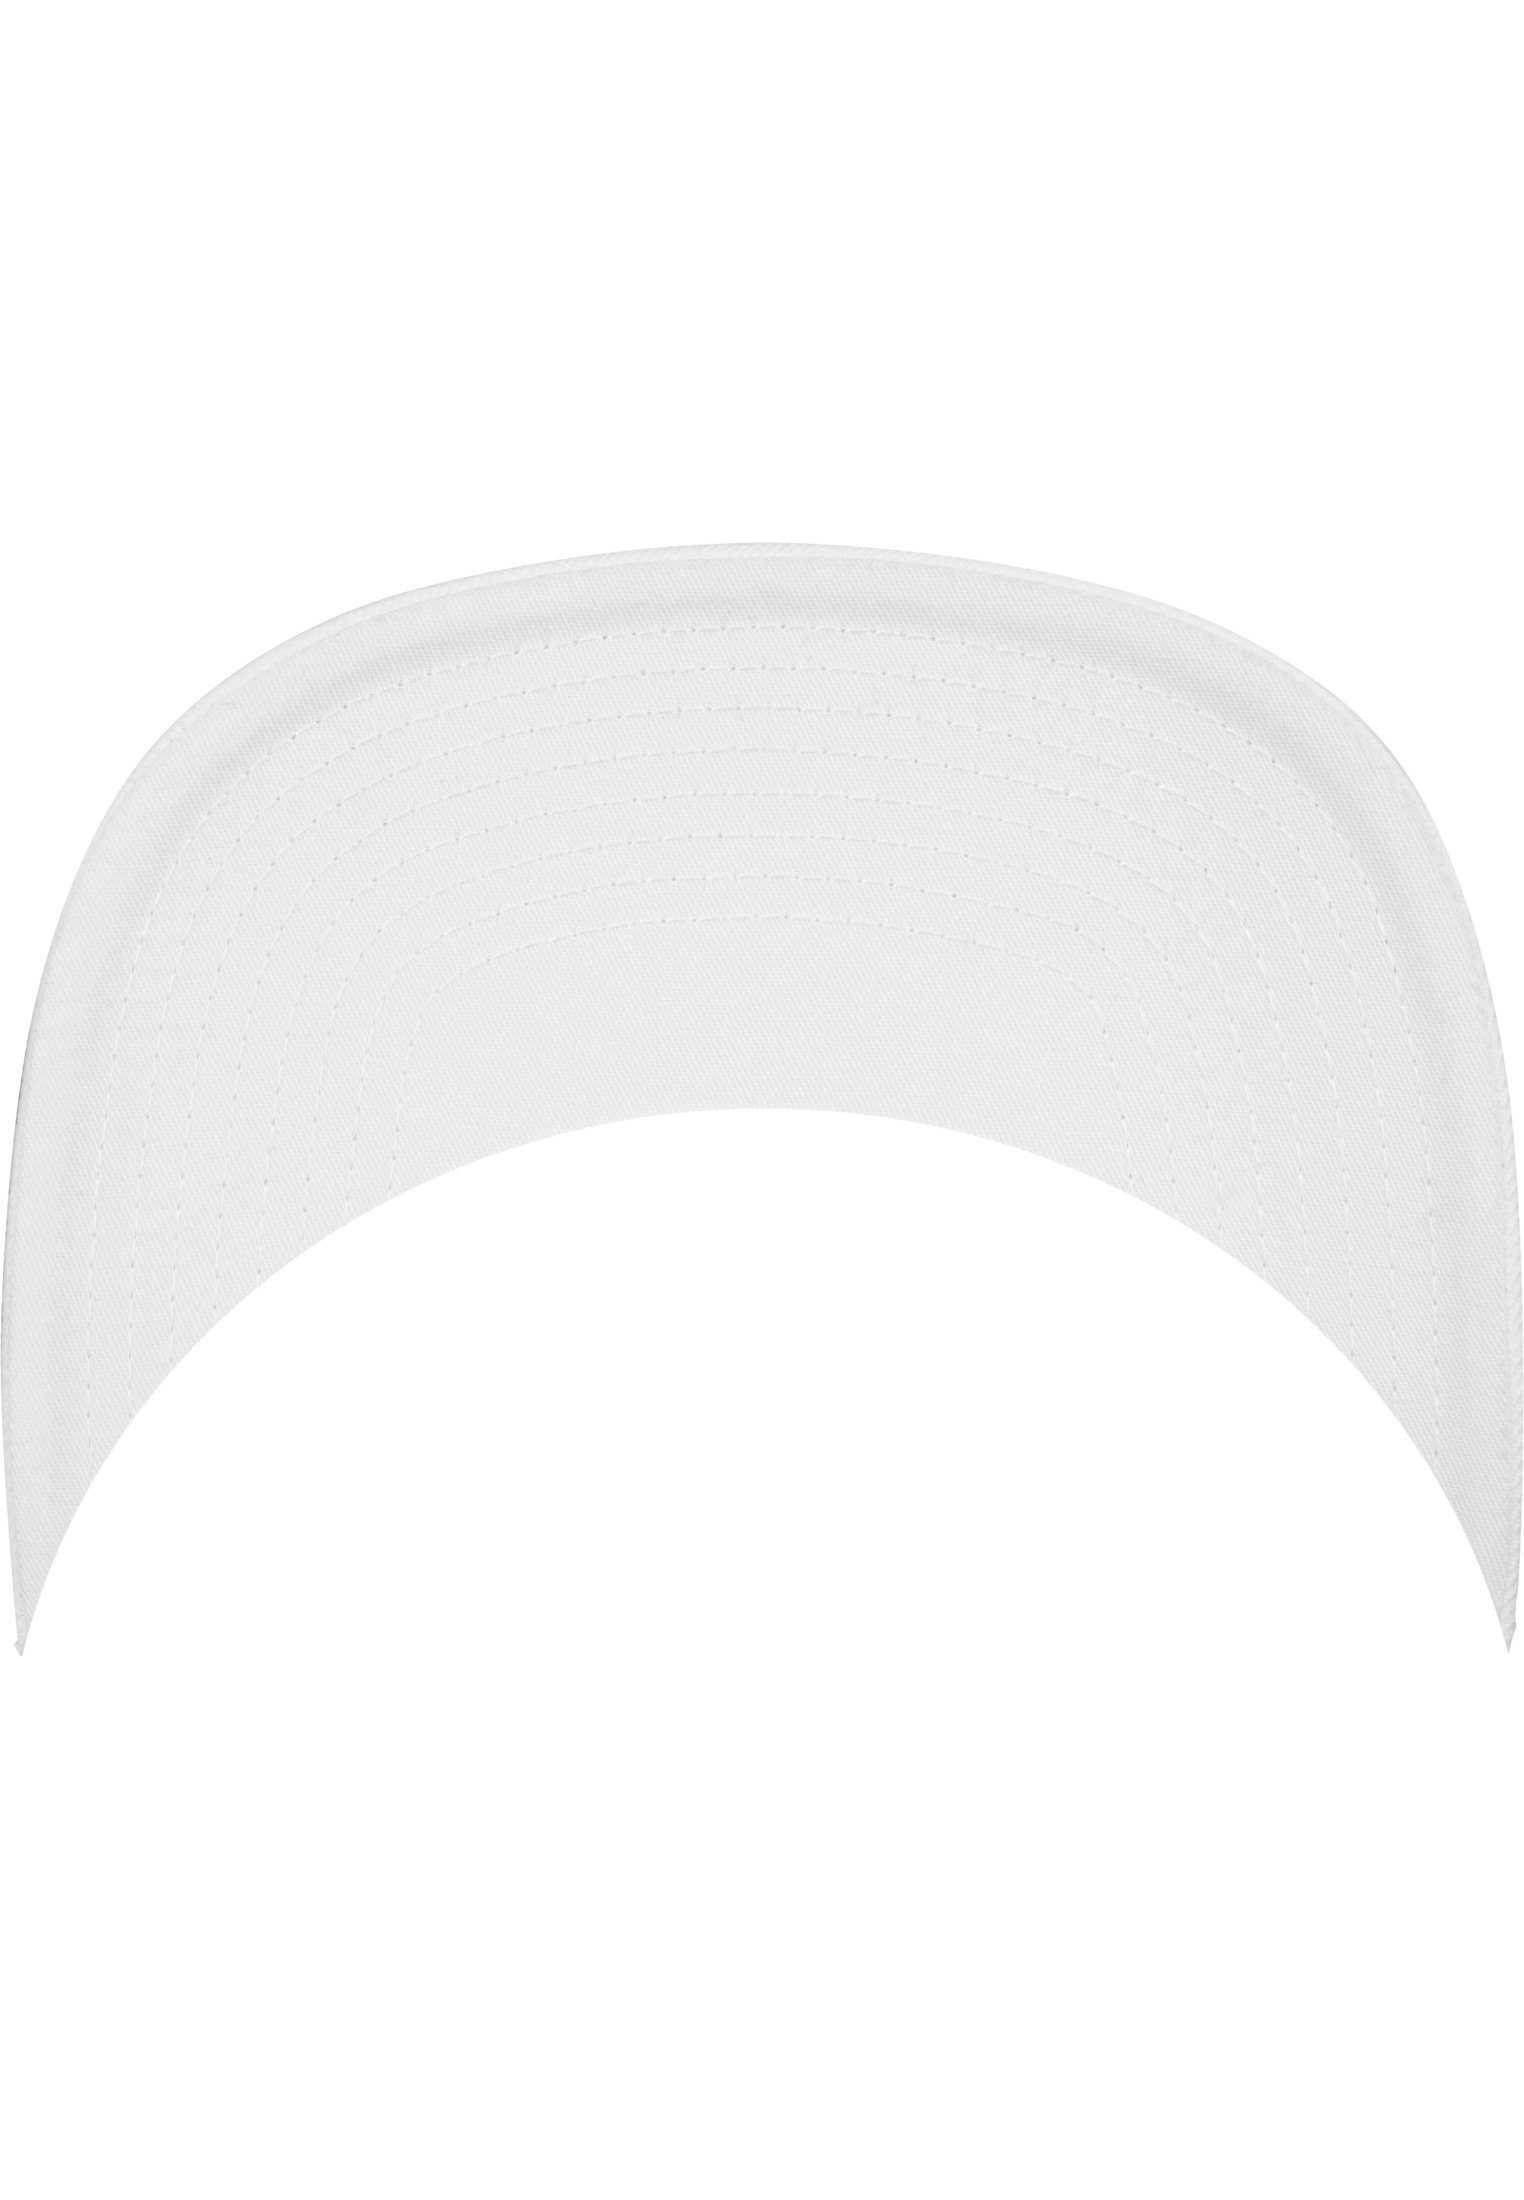 Flexfit Flex Cap Snapback Tie Bandana white/white Snapback